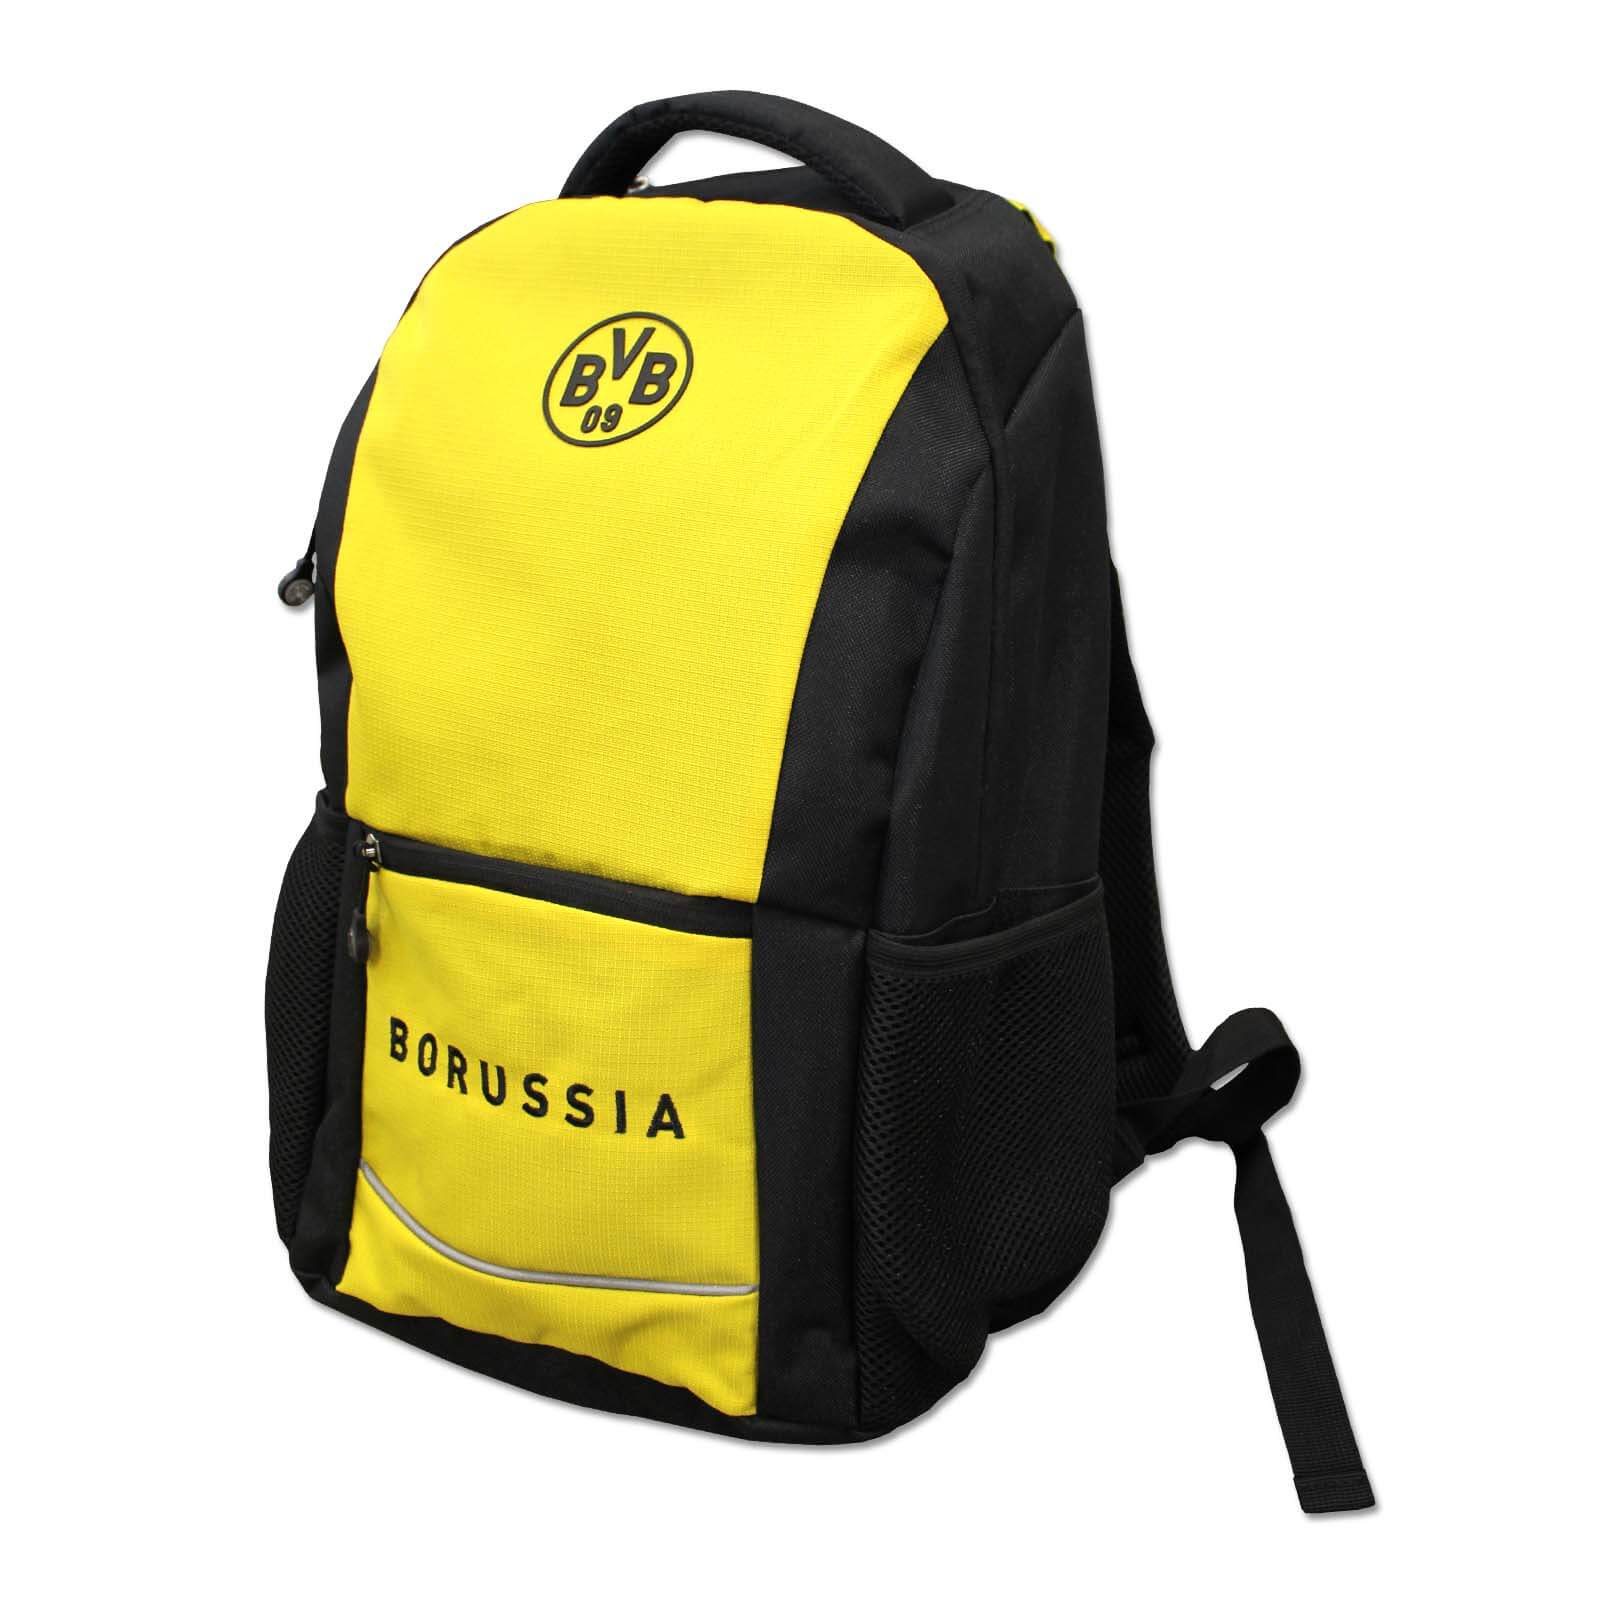 BVB backpack (black-yellow) | Bags 